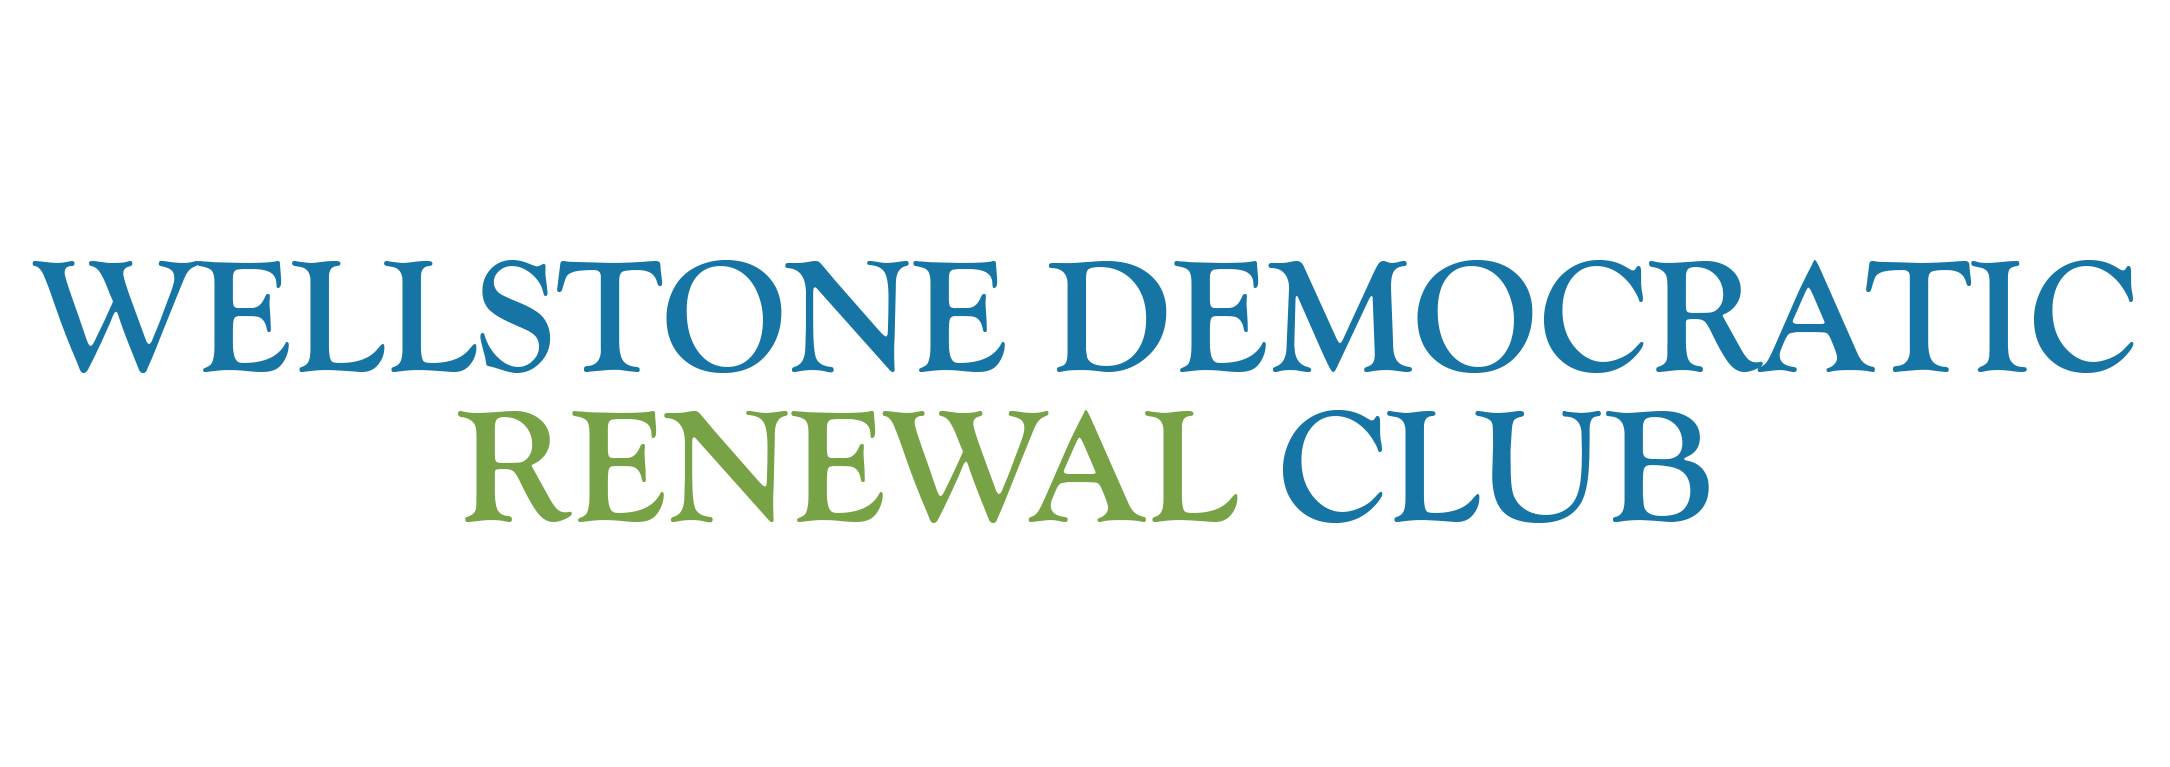 Wellstone Democratic Renewal Club